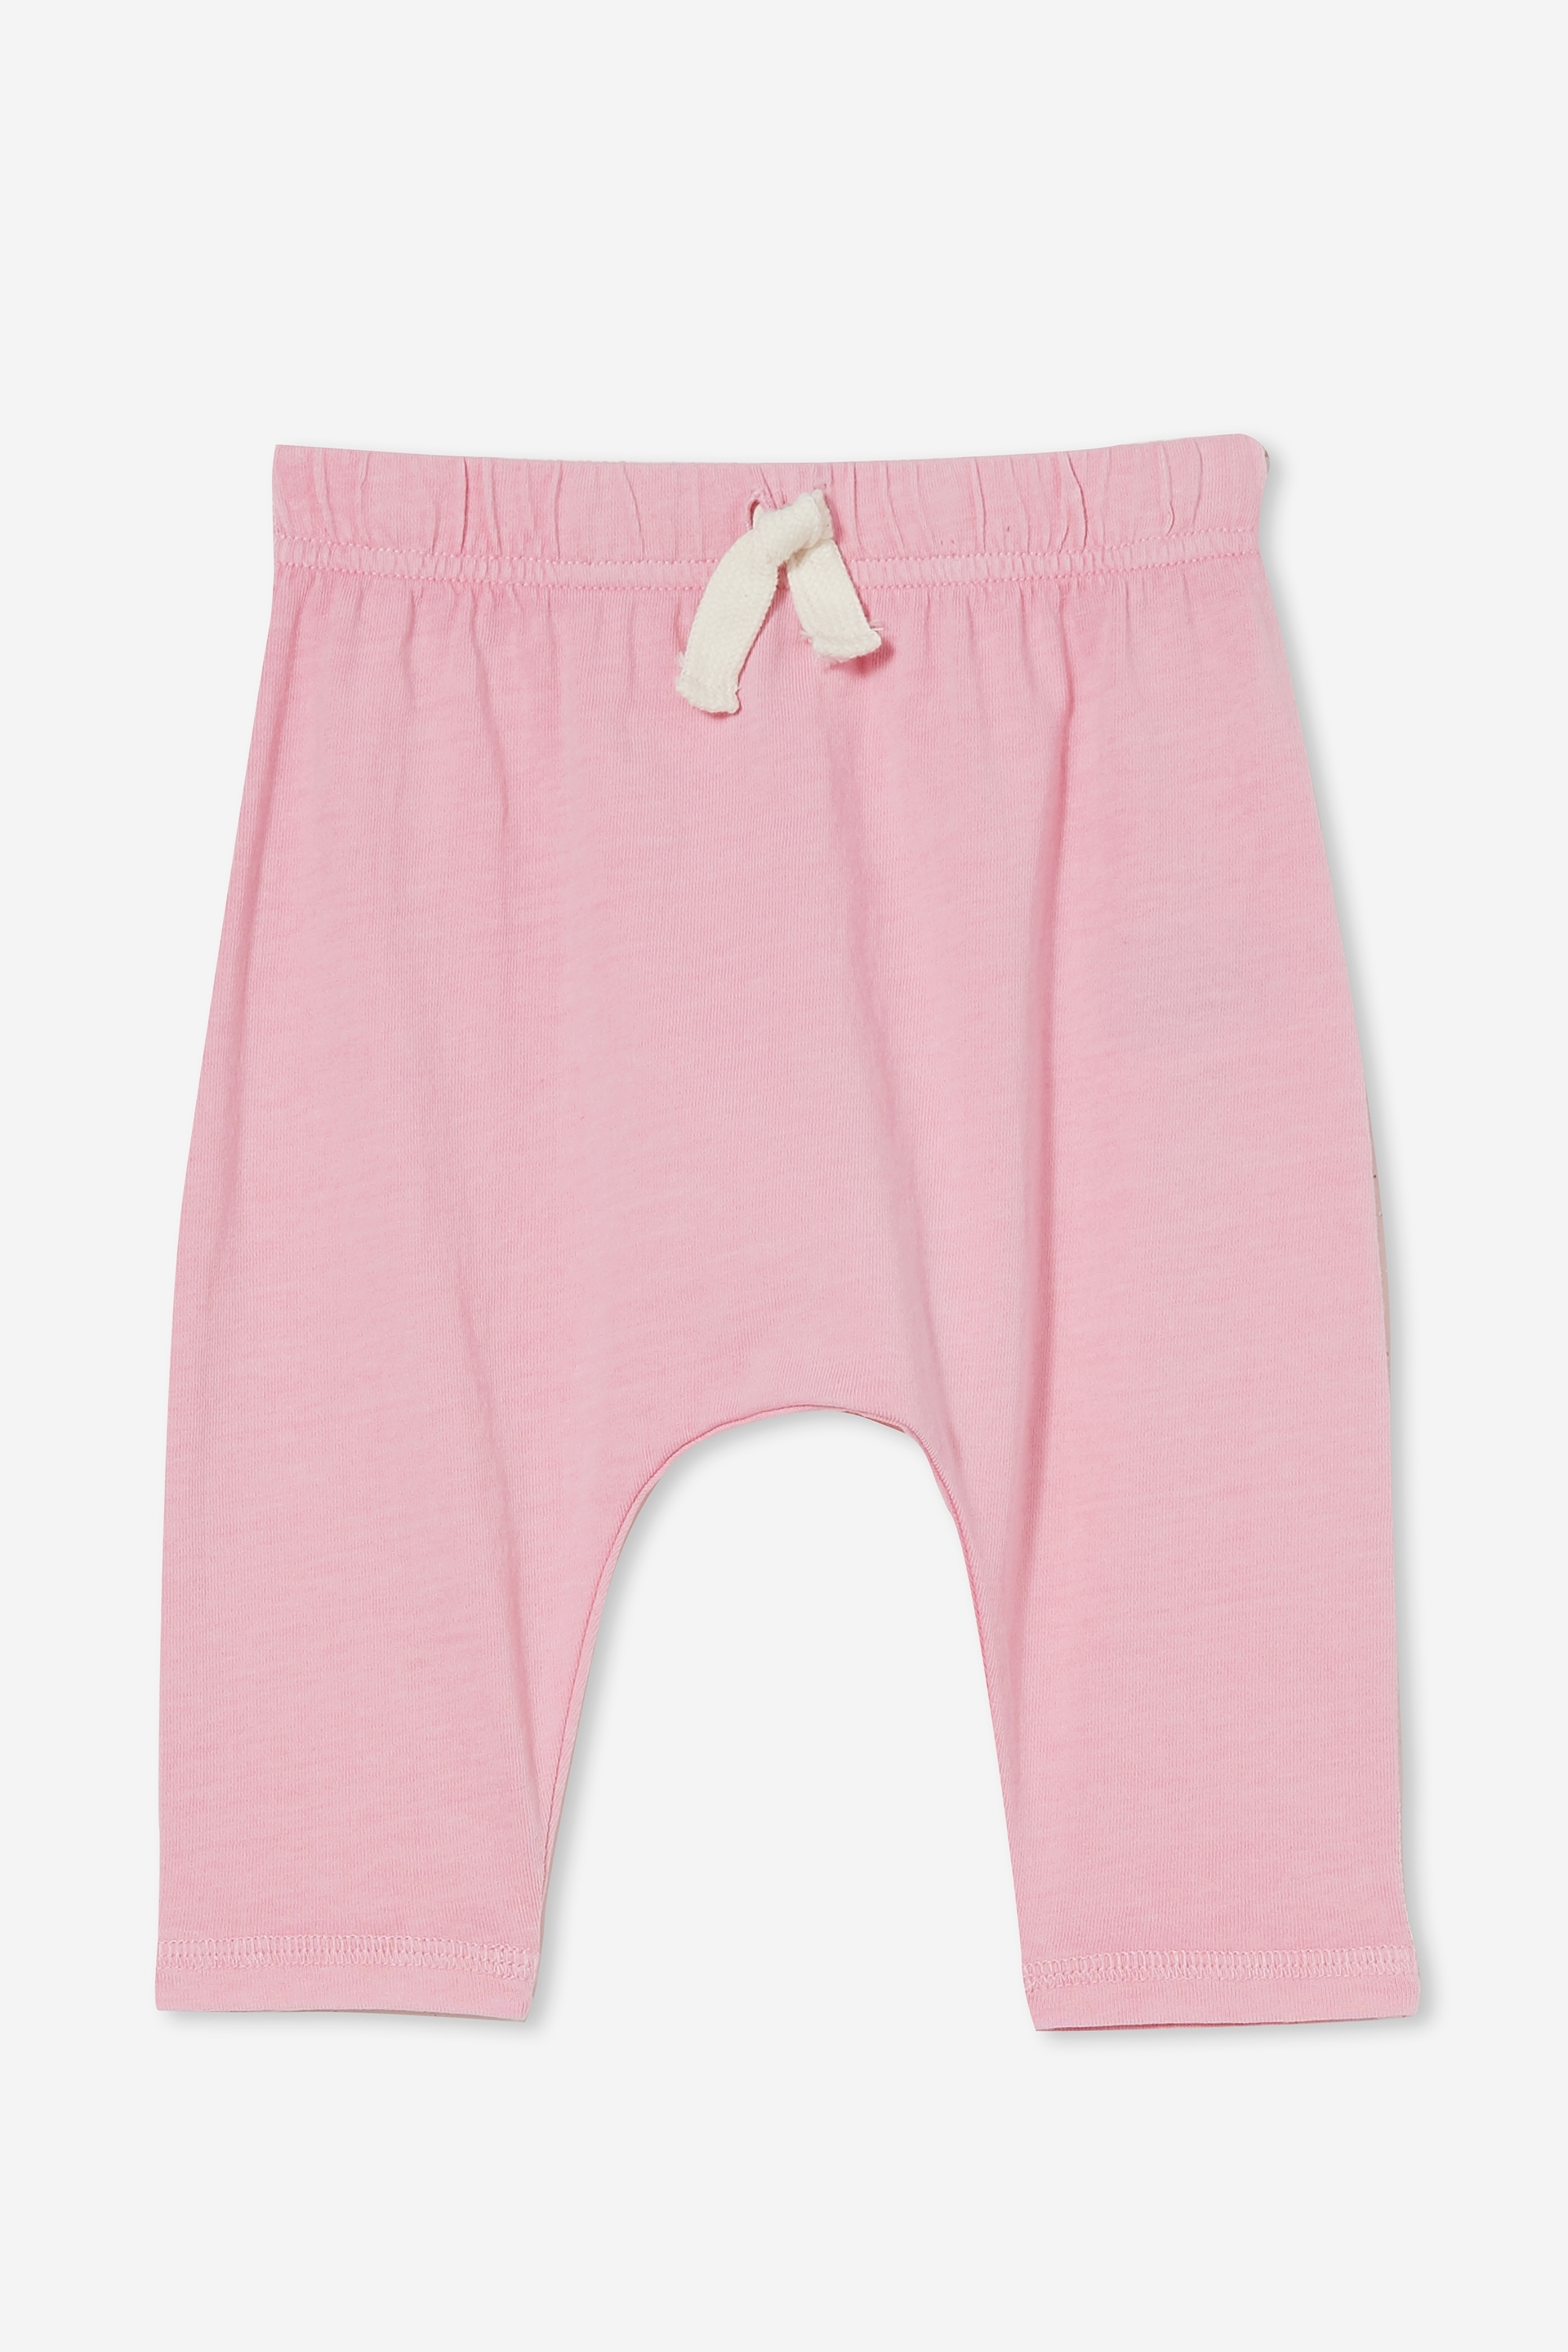 Cotton On Kids - Anders Legging - Cali pink wash